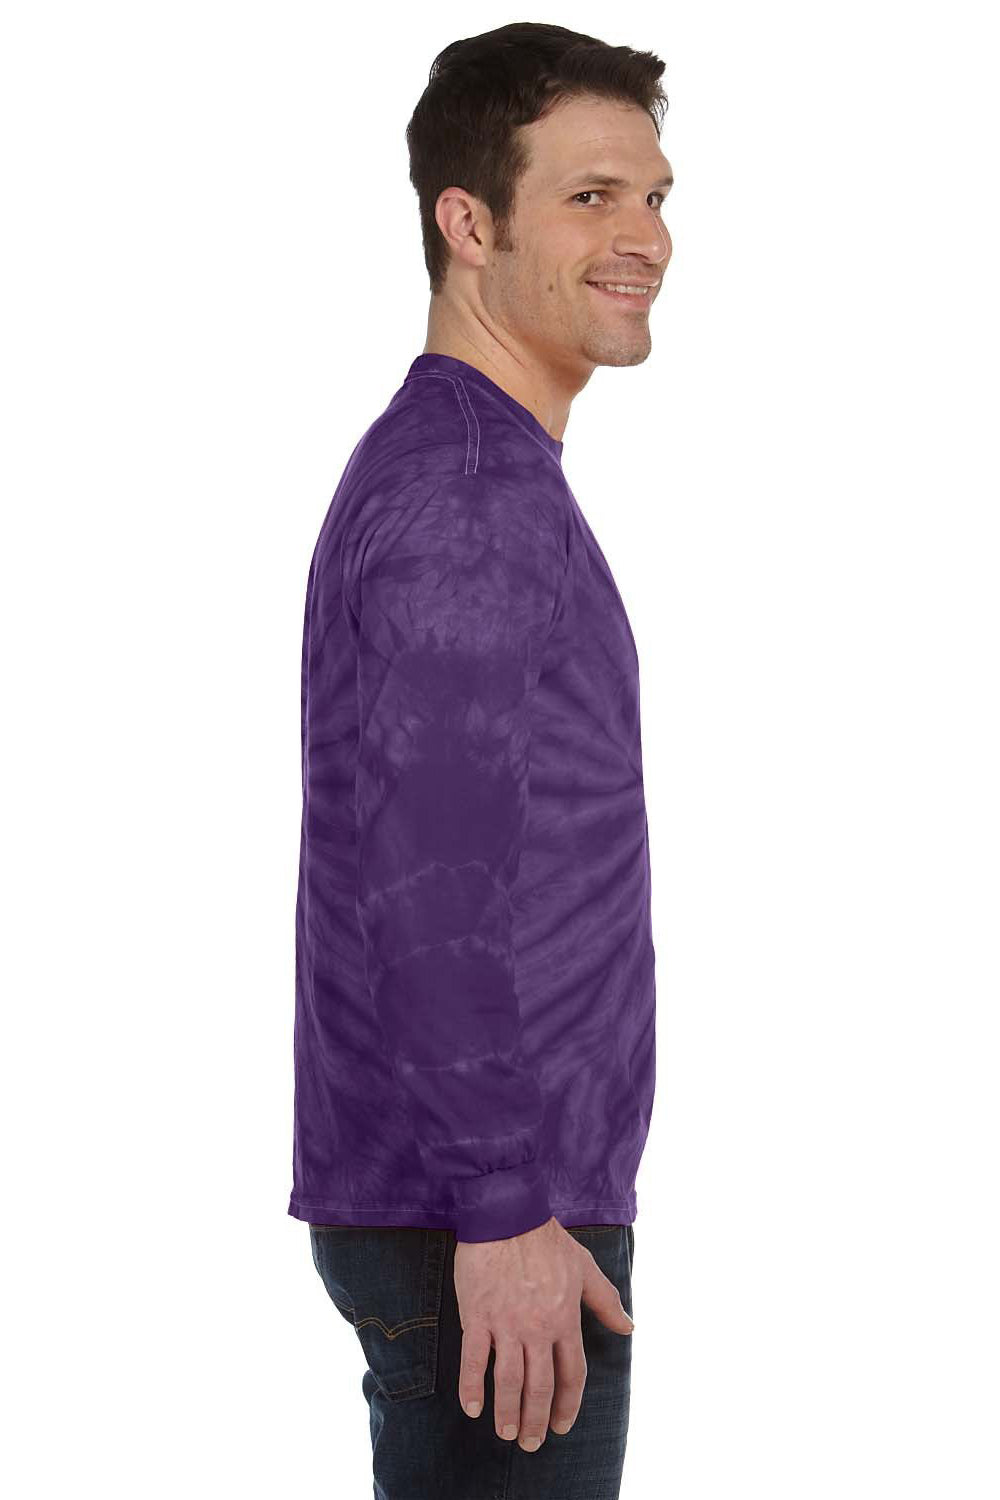 Tie-Dye CD2000 Mens Long Sleeve Crewneck T-Shirt Spider Purple SIde